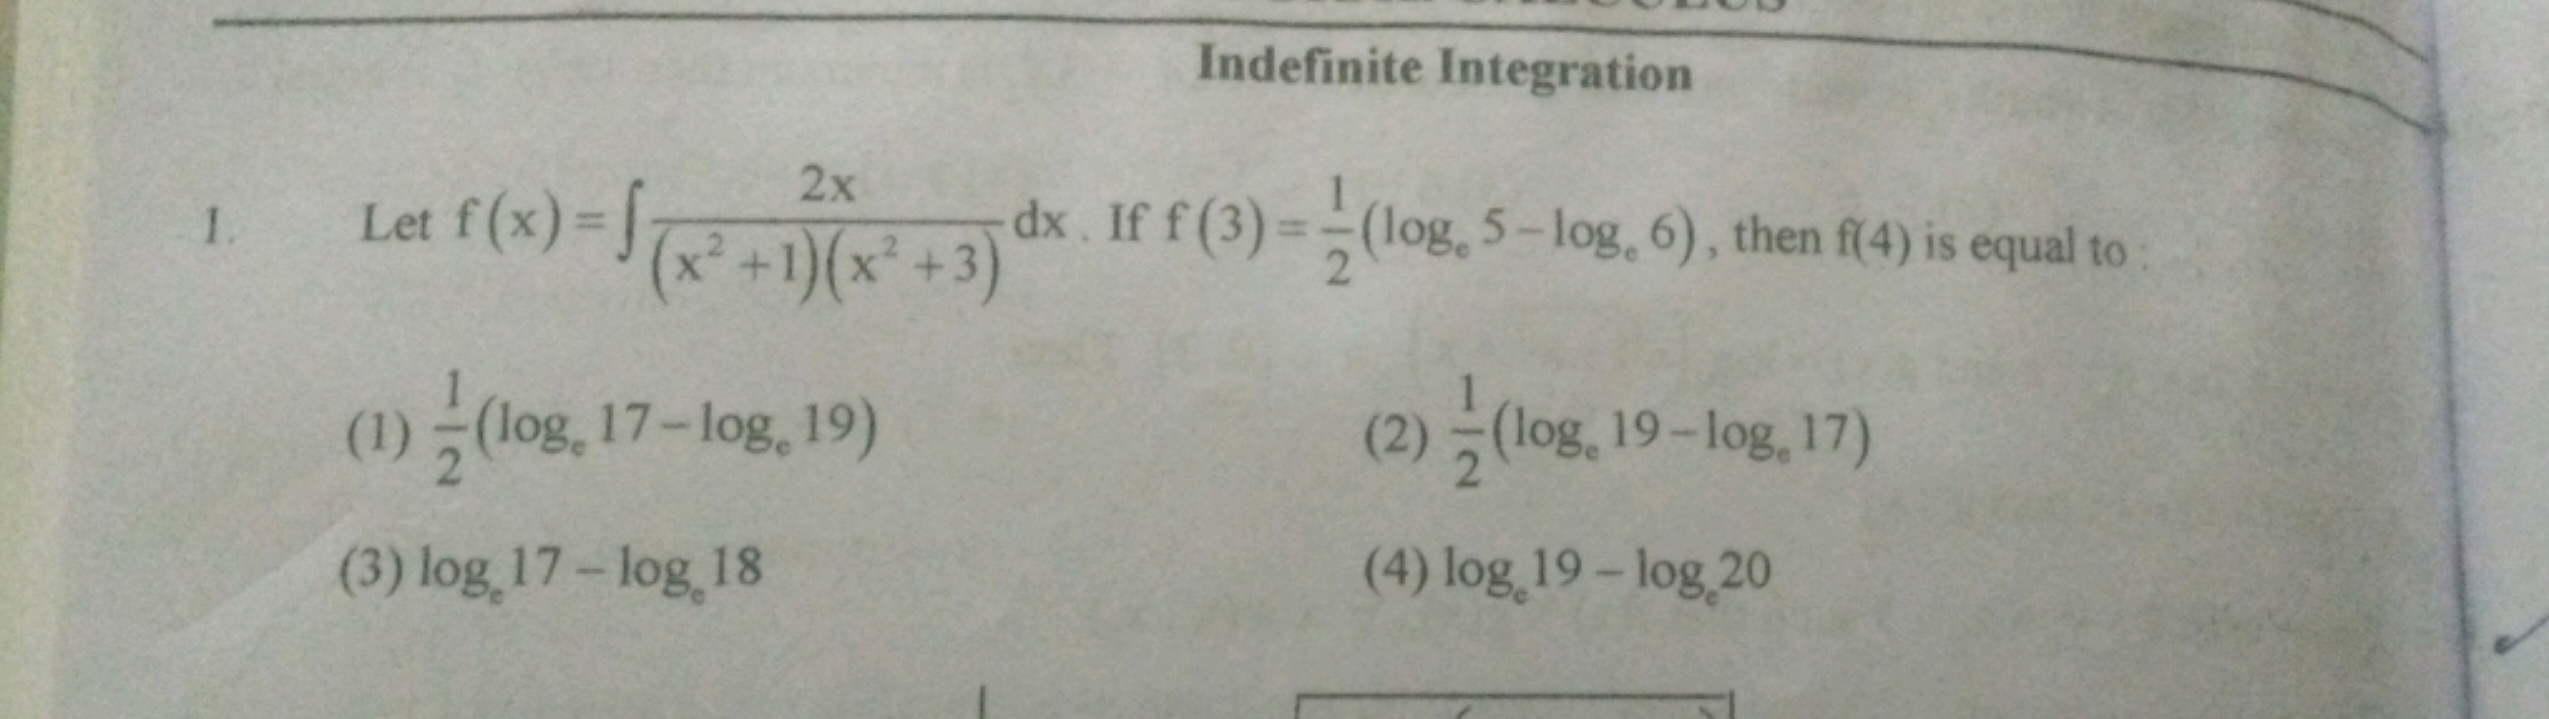 Indefinite Integration 1. Let f(x)=∫(x2+1)(x2+3)2x​dx. If f(3)=21​(log